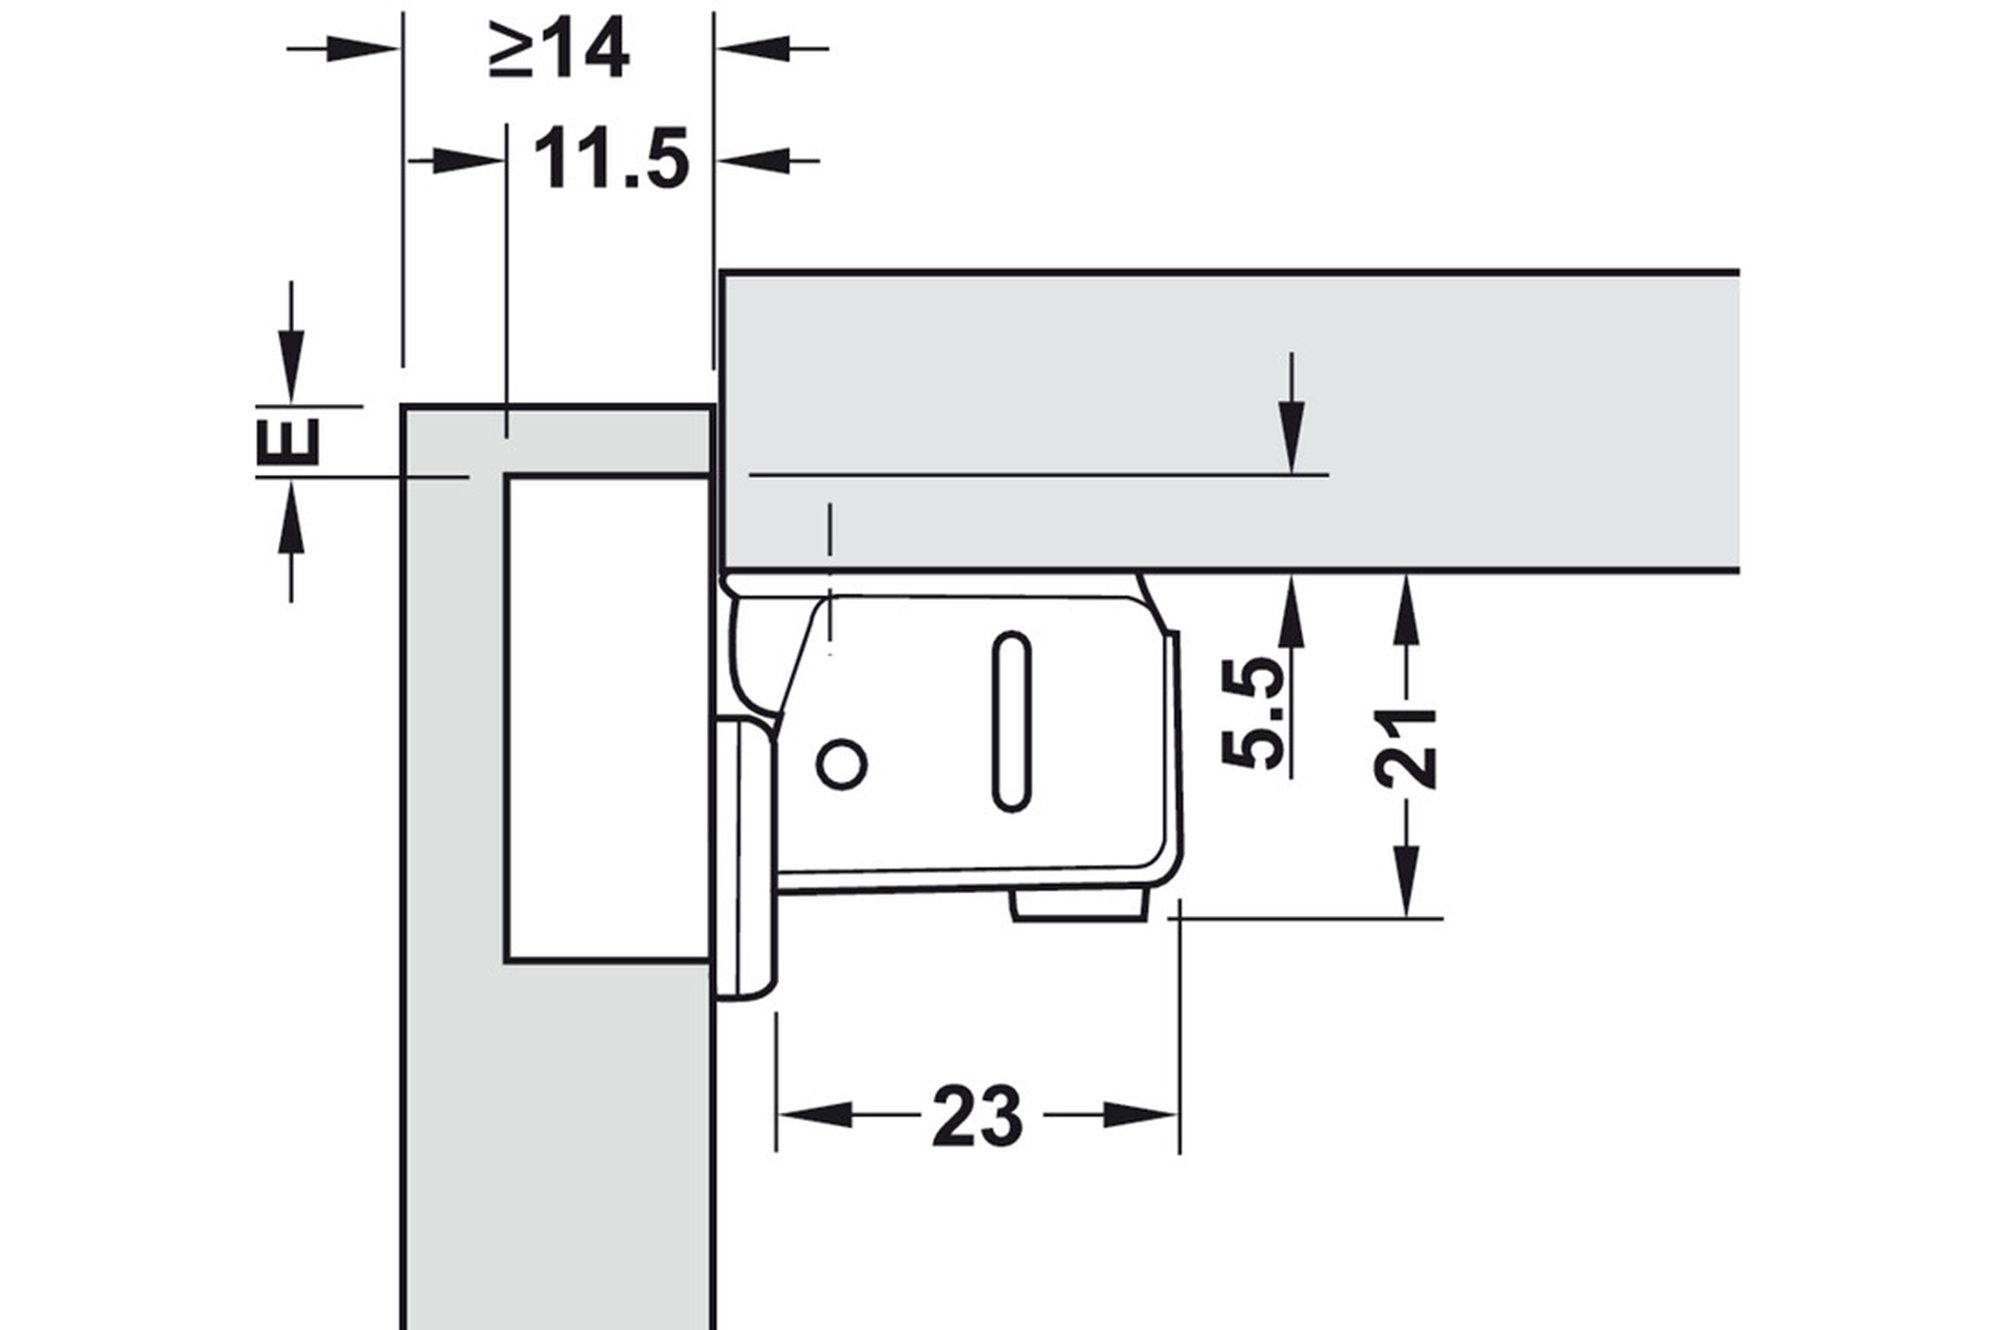 Häfele Möbelbeschlag Kurzarmscharnier Türscharnier Caravanscharnier St) Schließautomatik Schließautomatik 95° mit (1